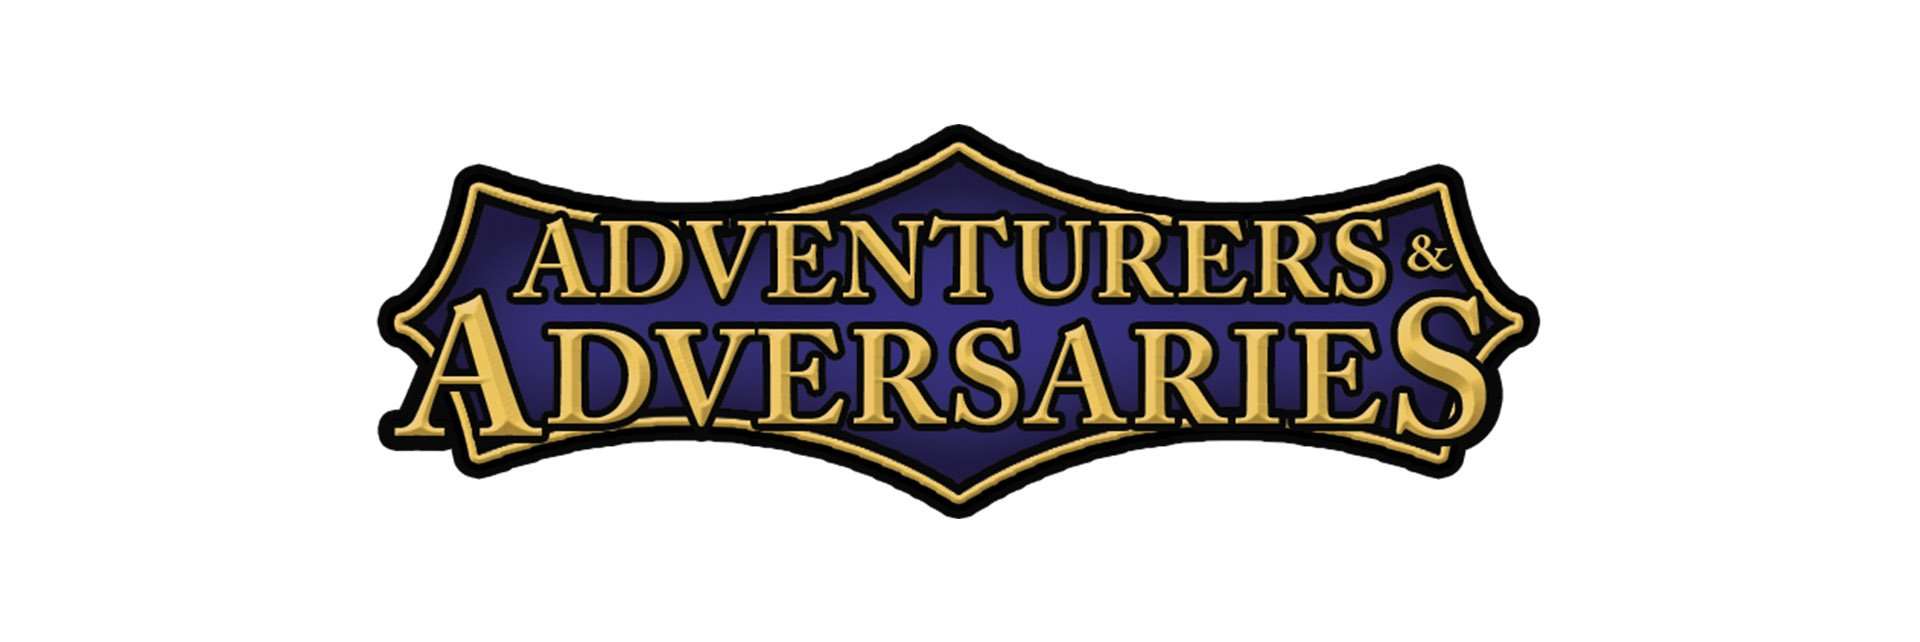 AdventurersAndAdversaries-Showcase-1